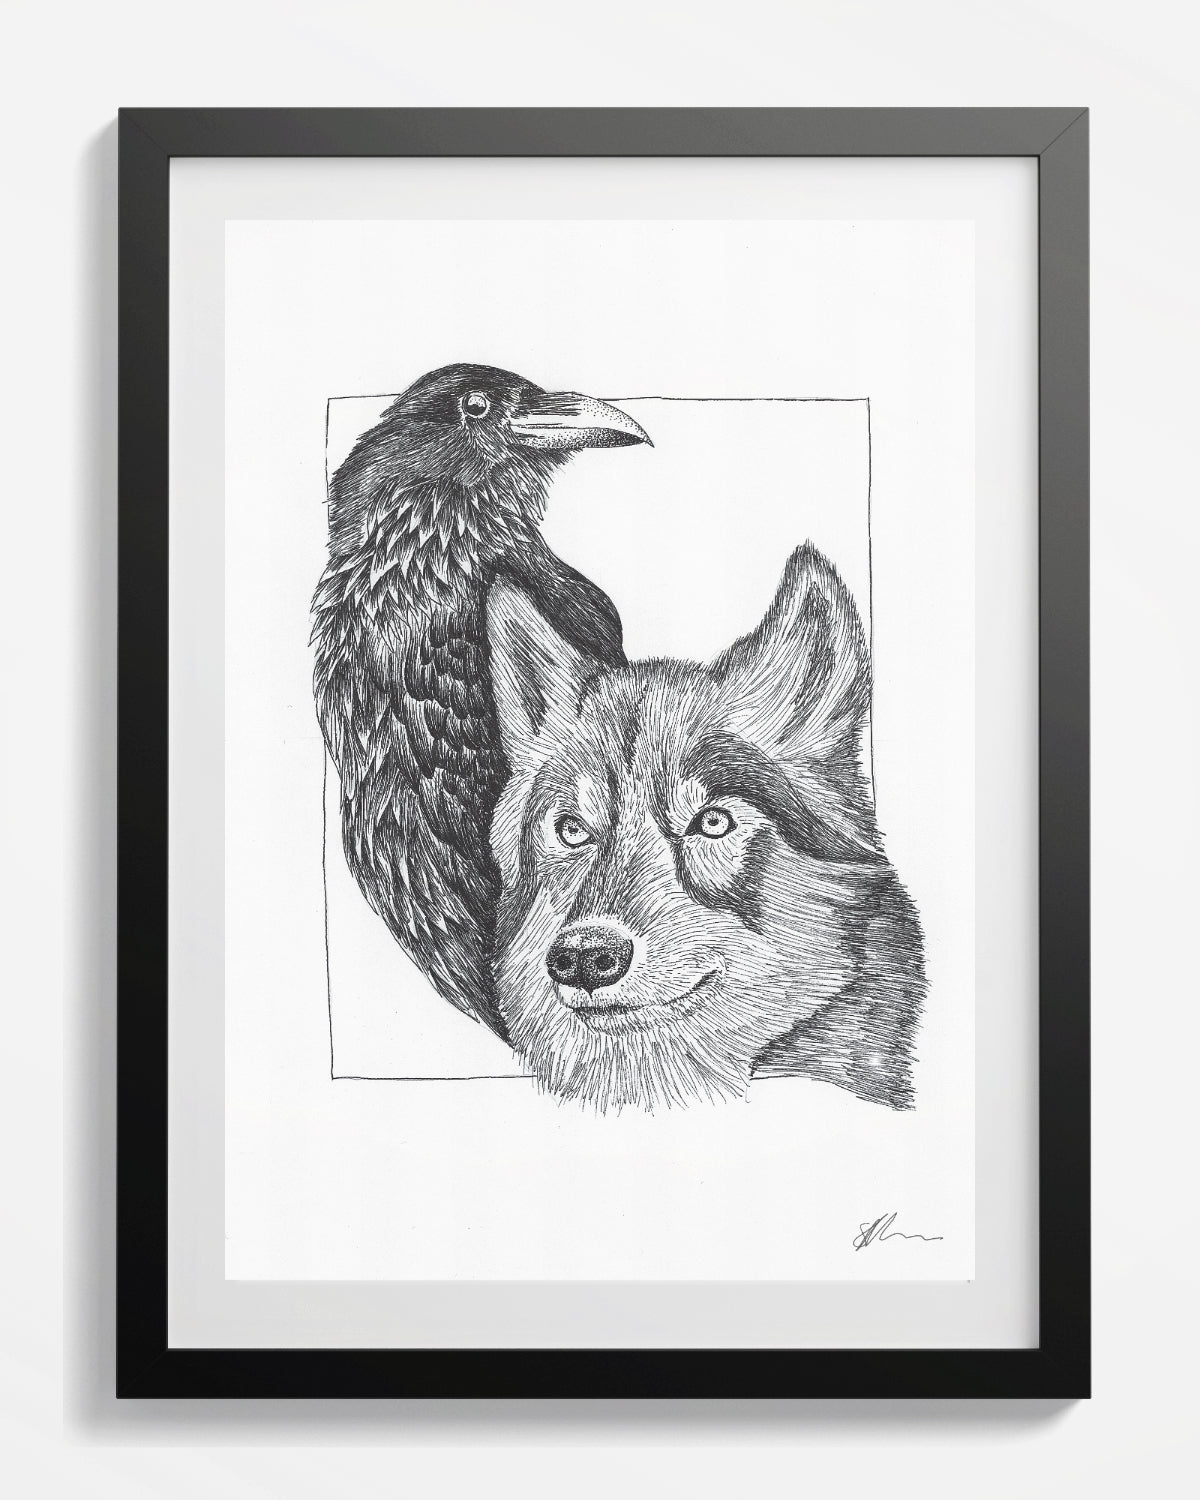 Raven & Wolf